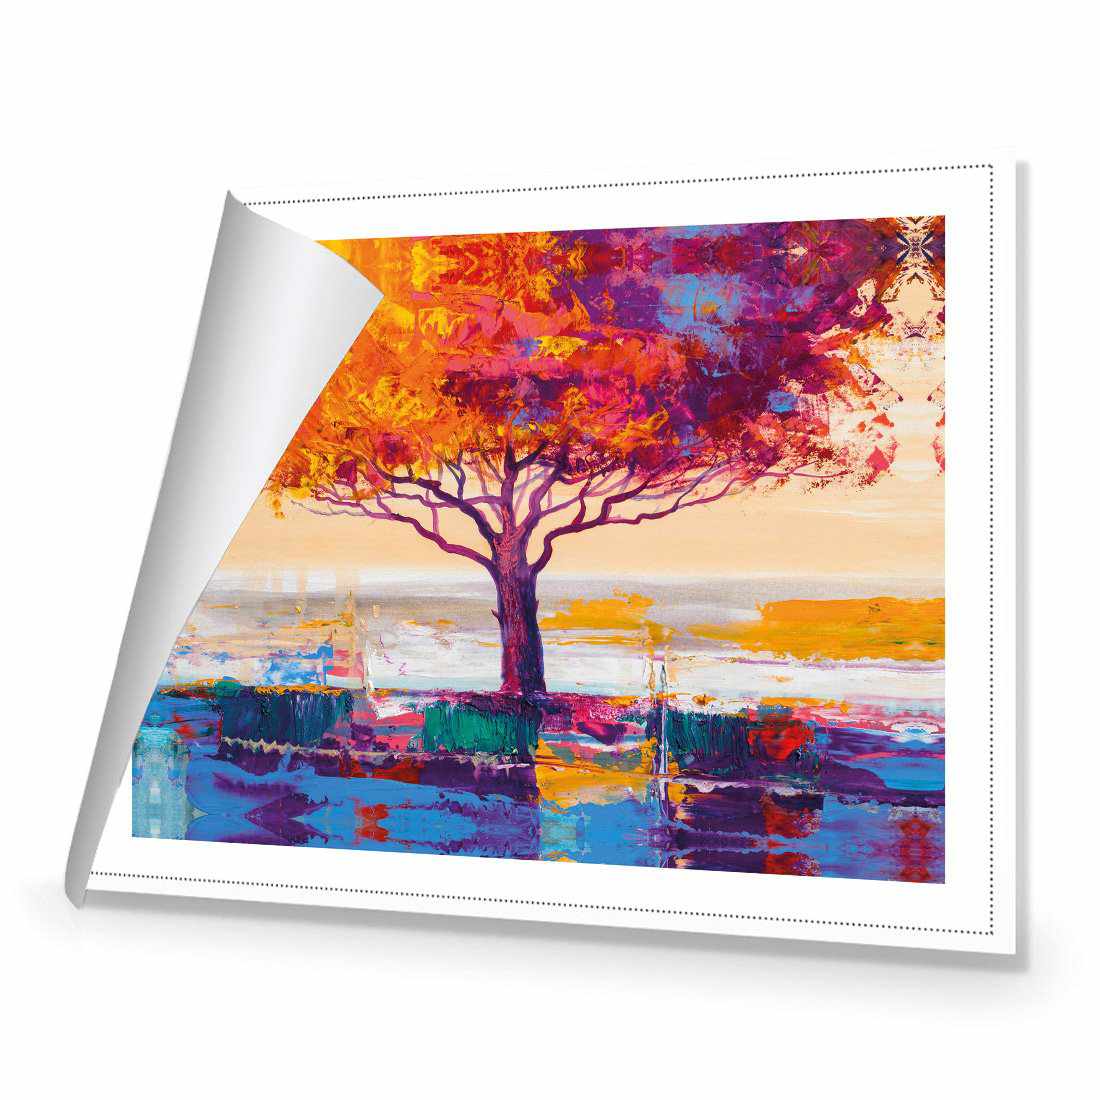 Dreamtime Tree Canvas Art-Canvas-Wall Art Designs-45x30cm-Rolled Canvas-Wall Art Designs